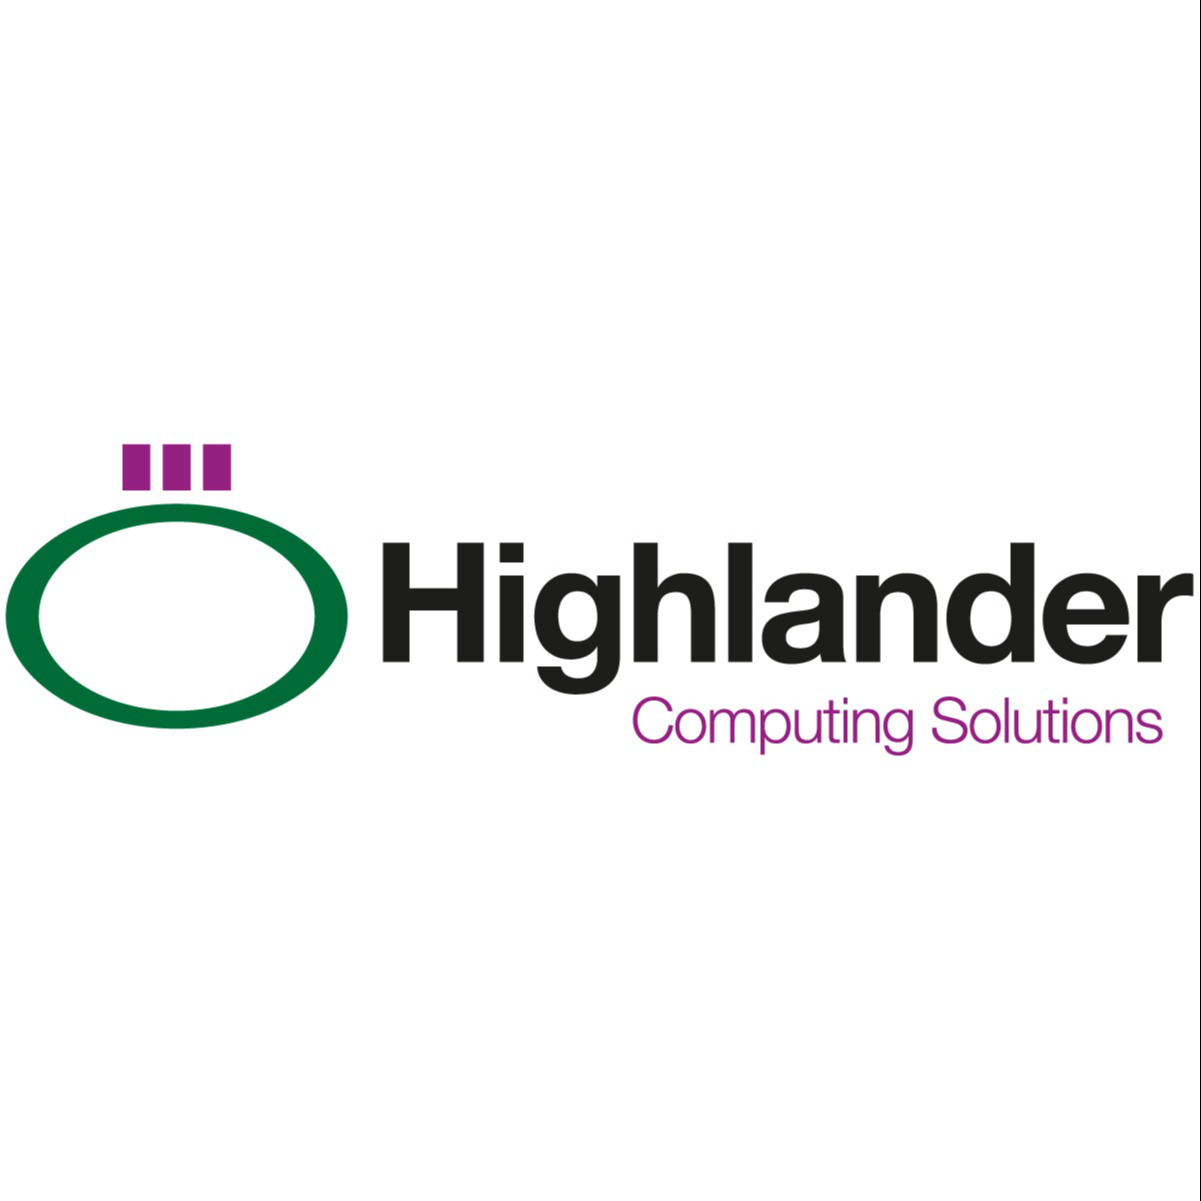 Highlander Computing (HE) Employer Skills Academy